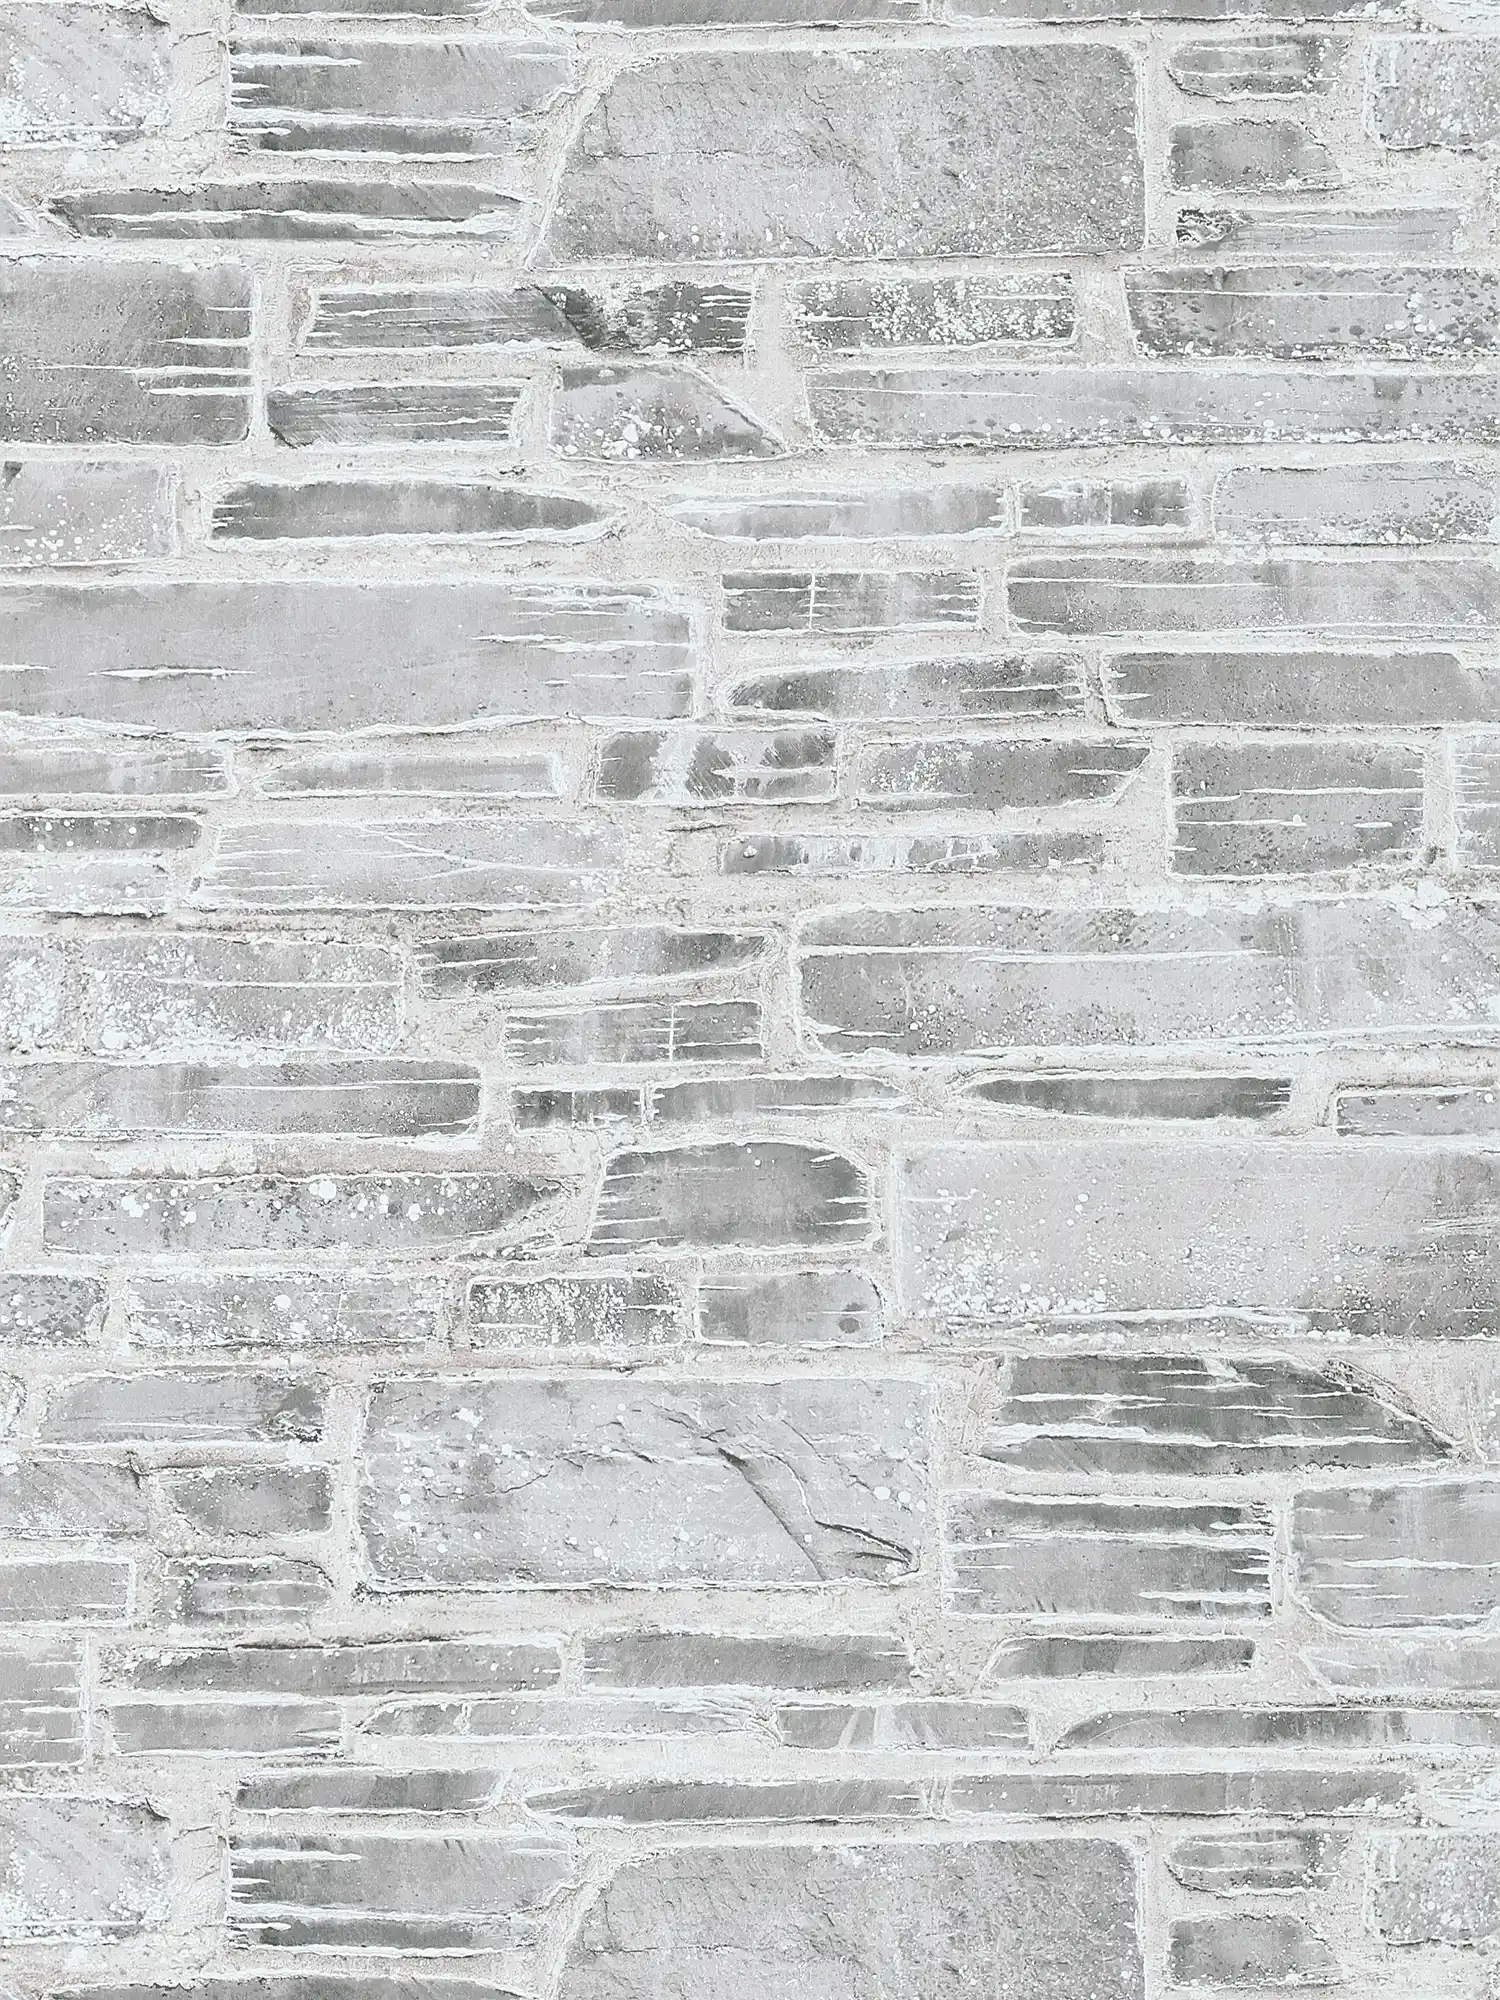         Tapete Steinmauer rustikal mit 3D-Effekt – Grau, Beige
    